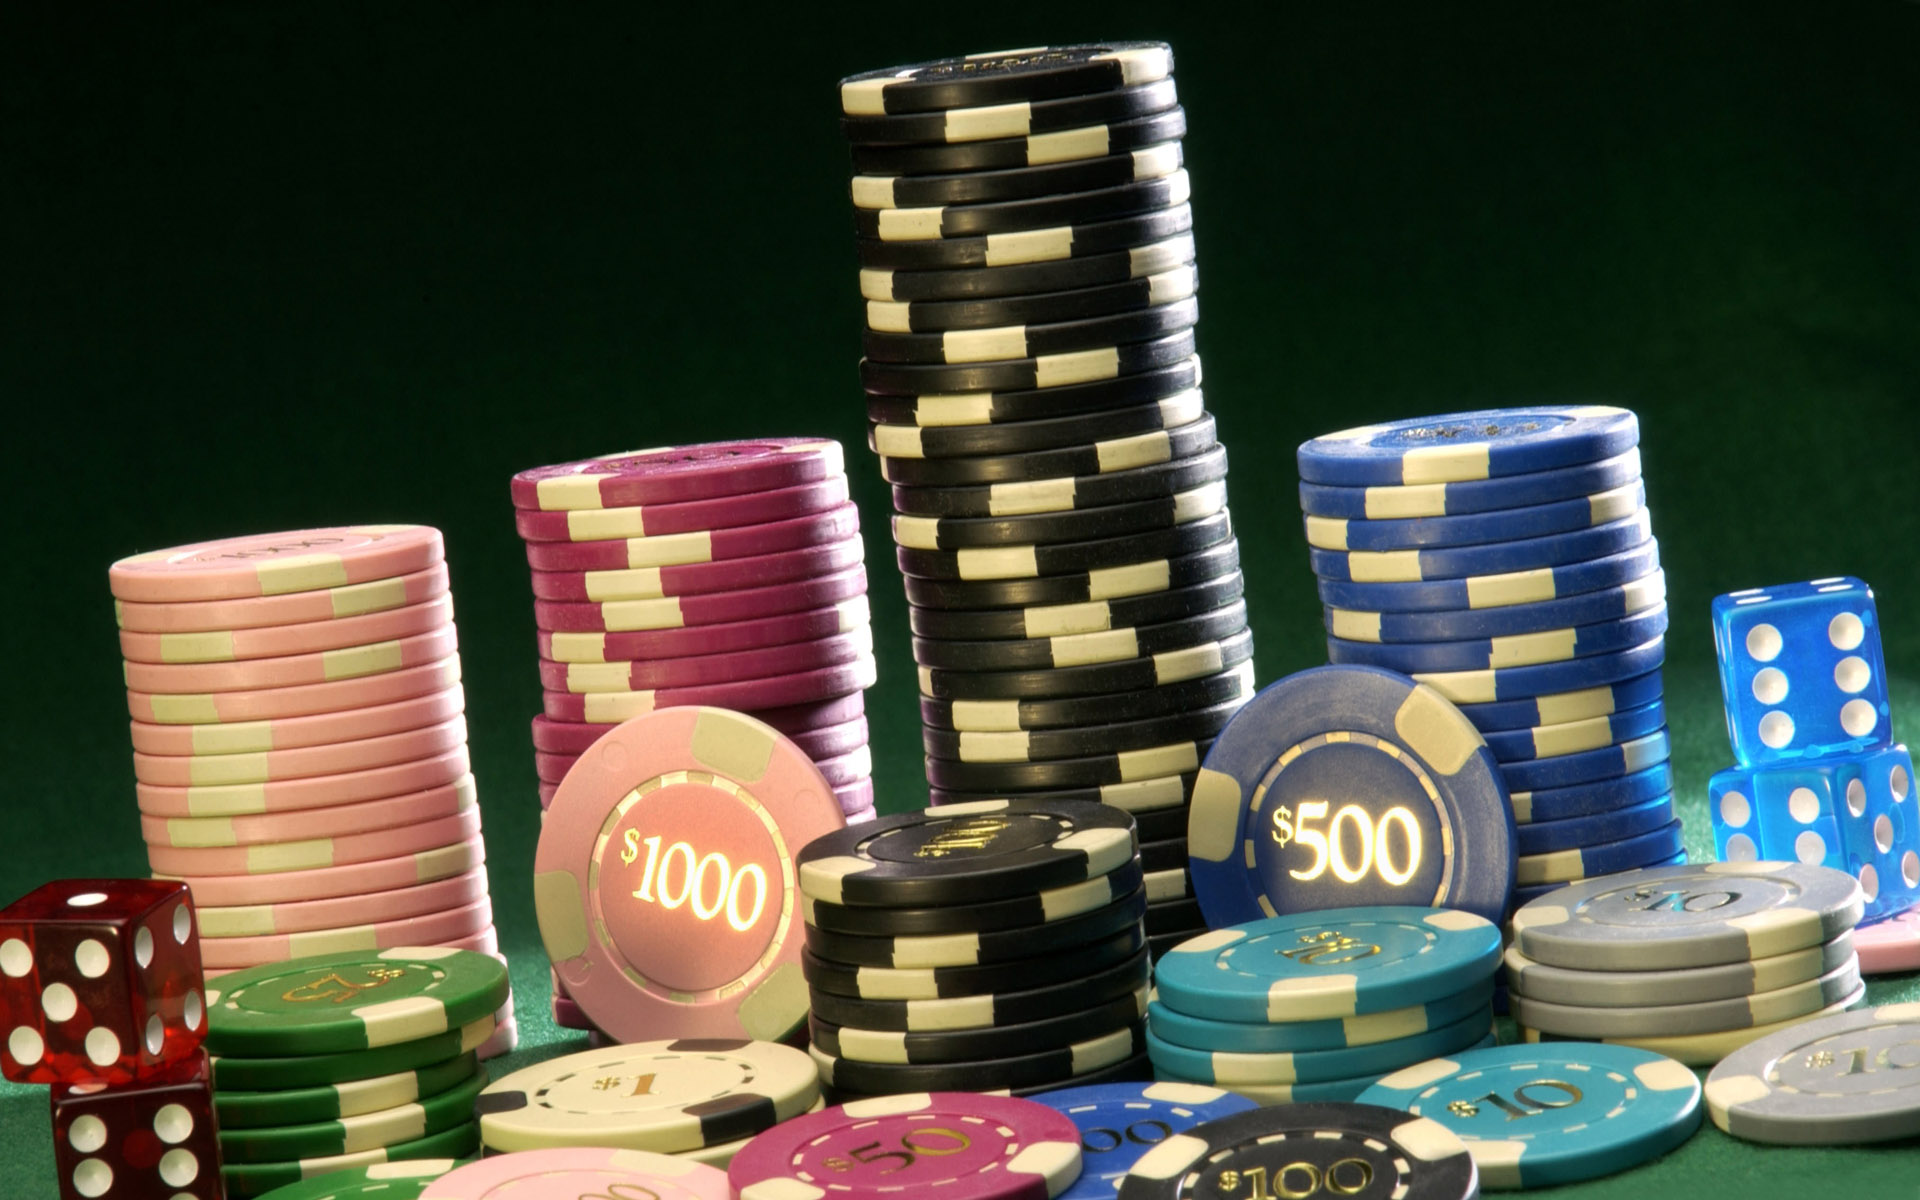 Poker chips-zynga 100b no bann safe chips mit granite